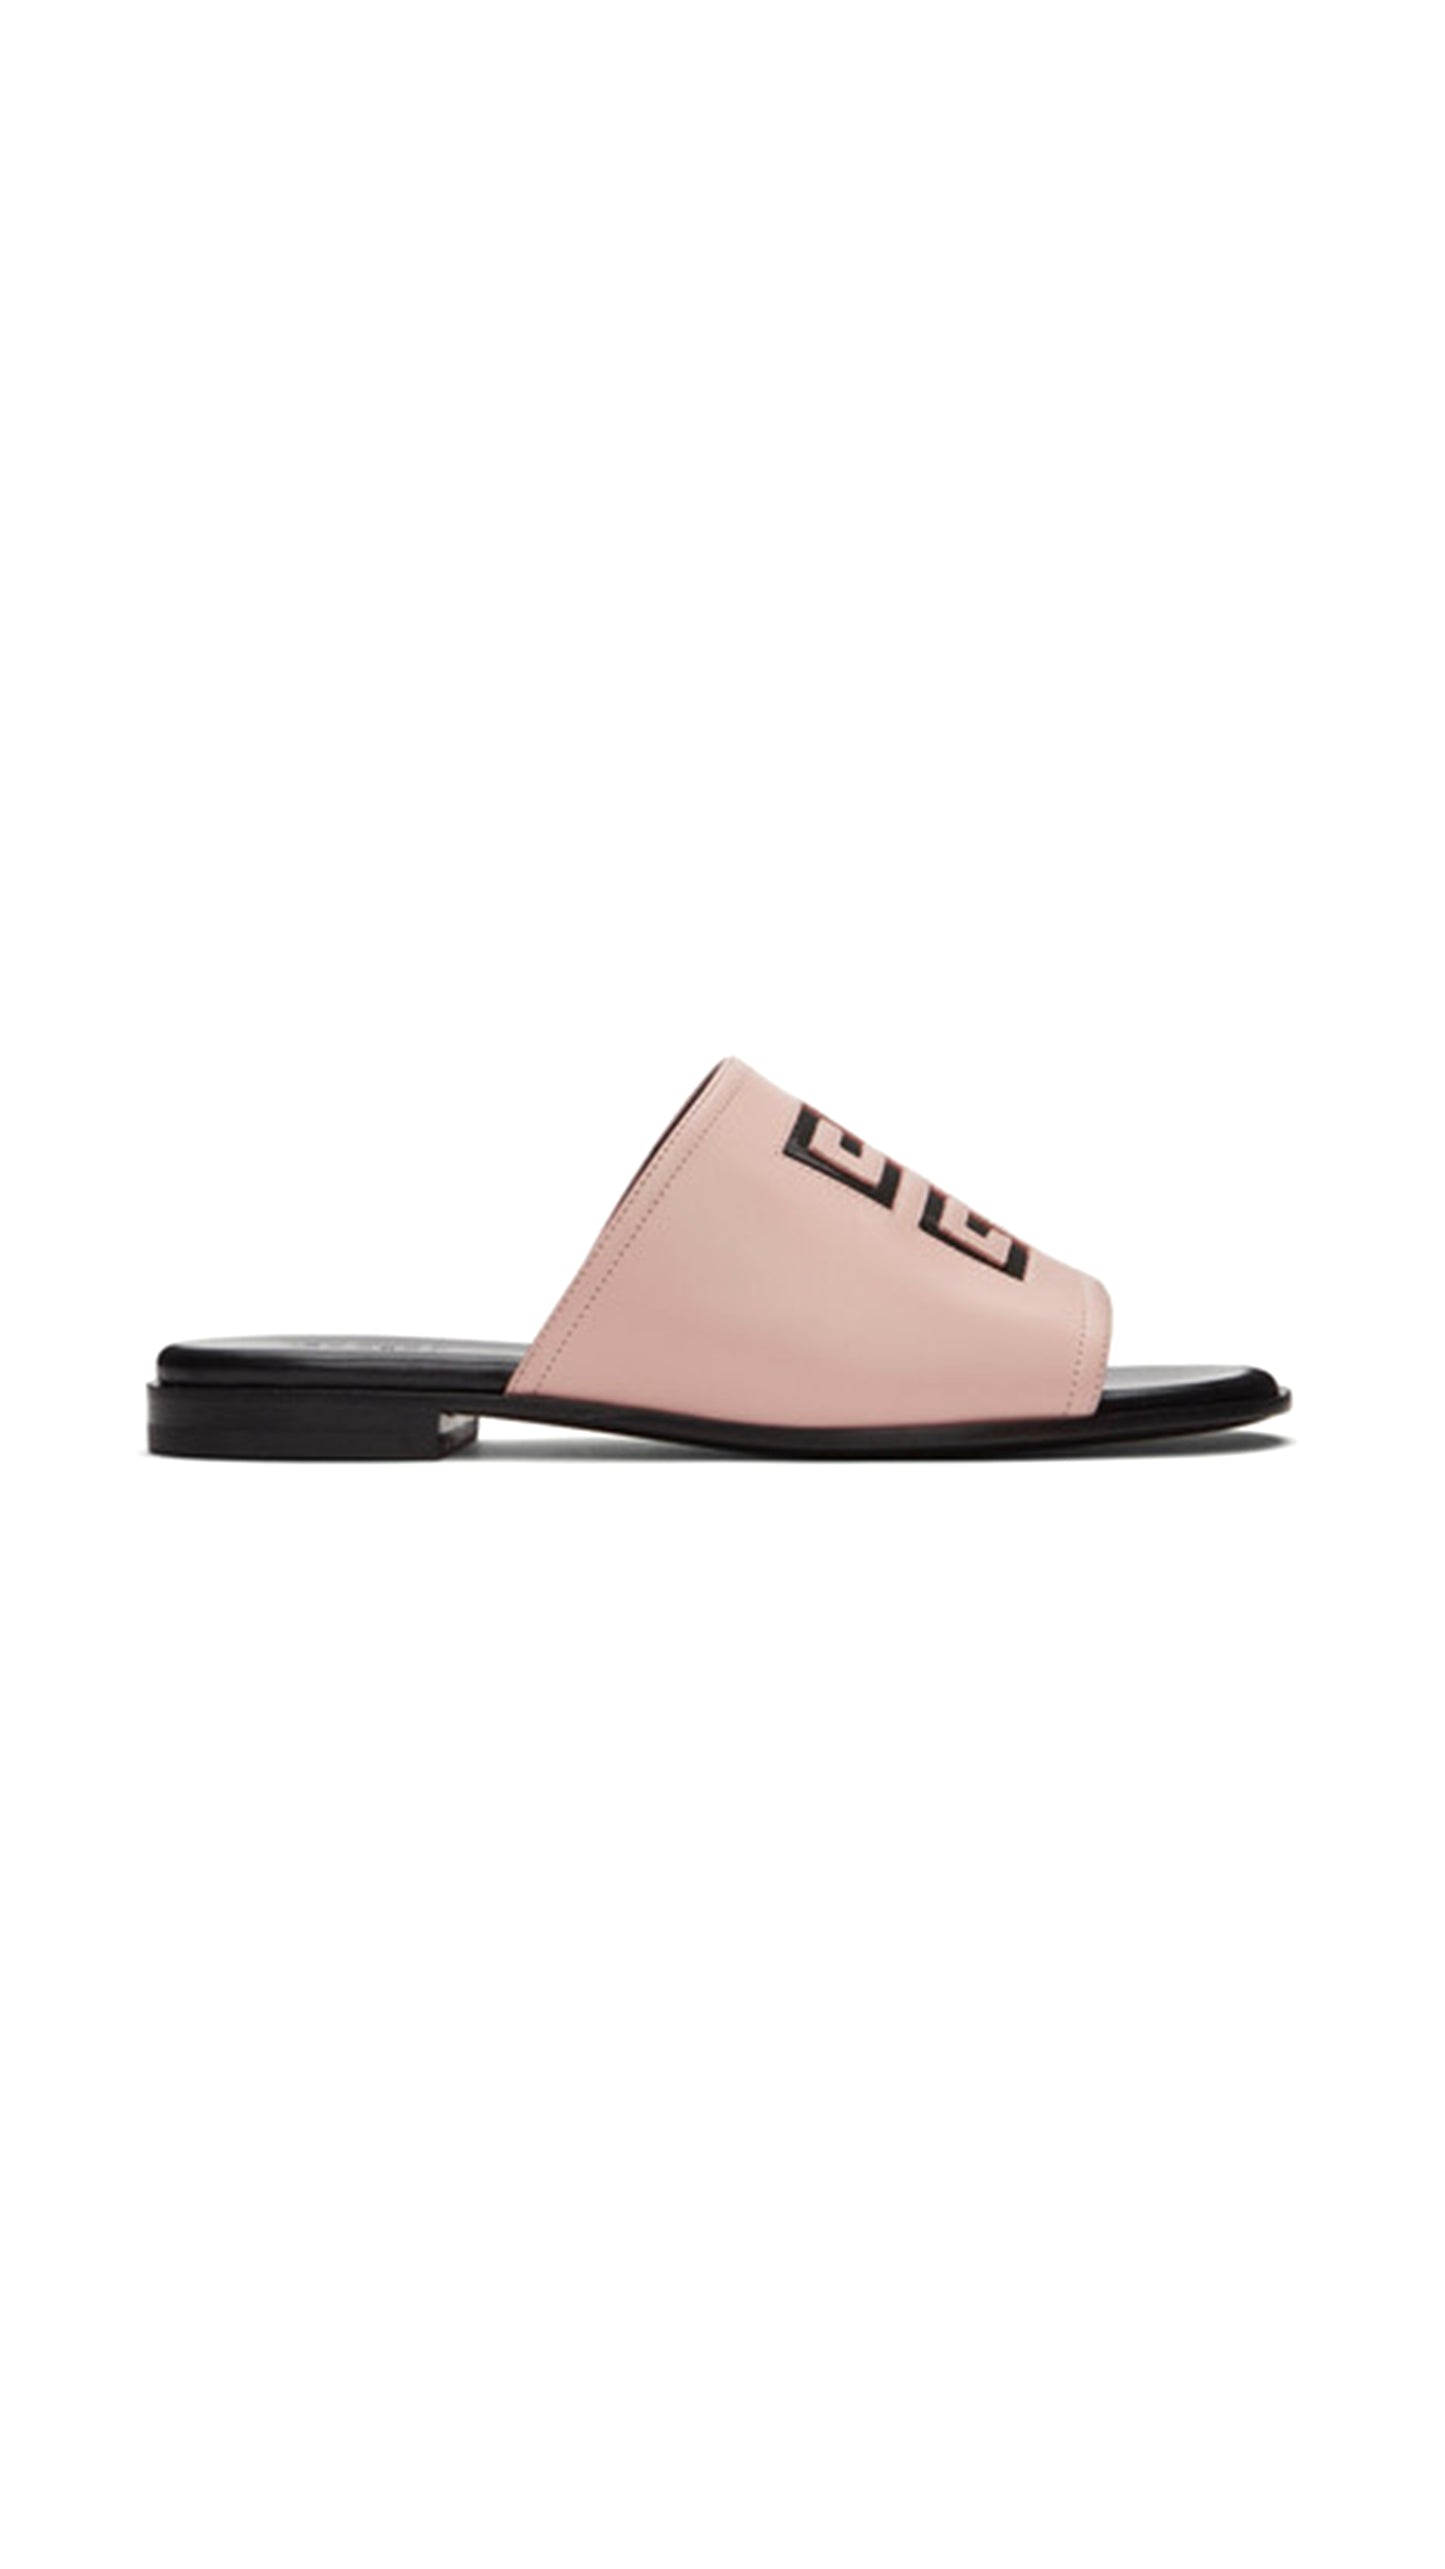 4G Open-Toe Sandals - Black / Pink